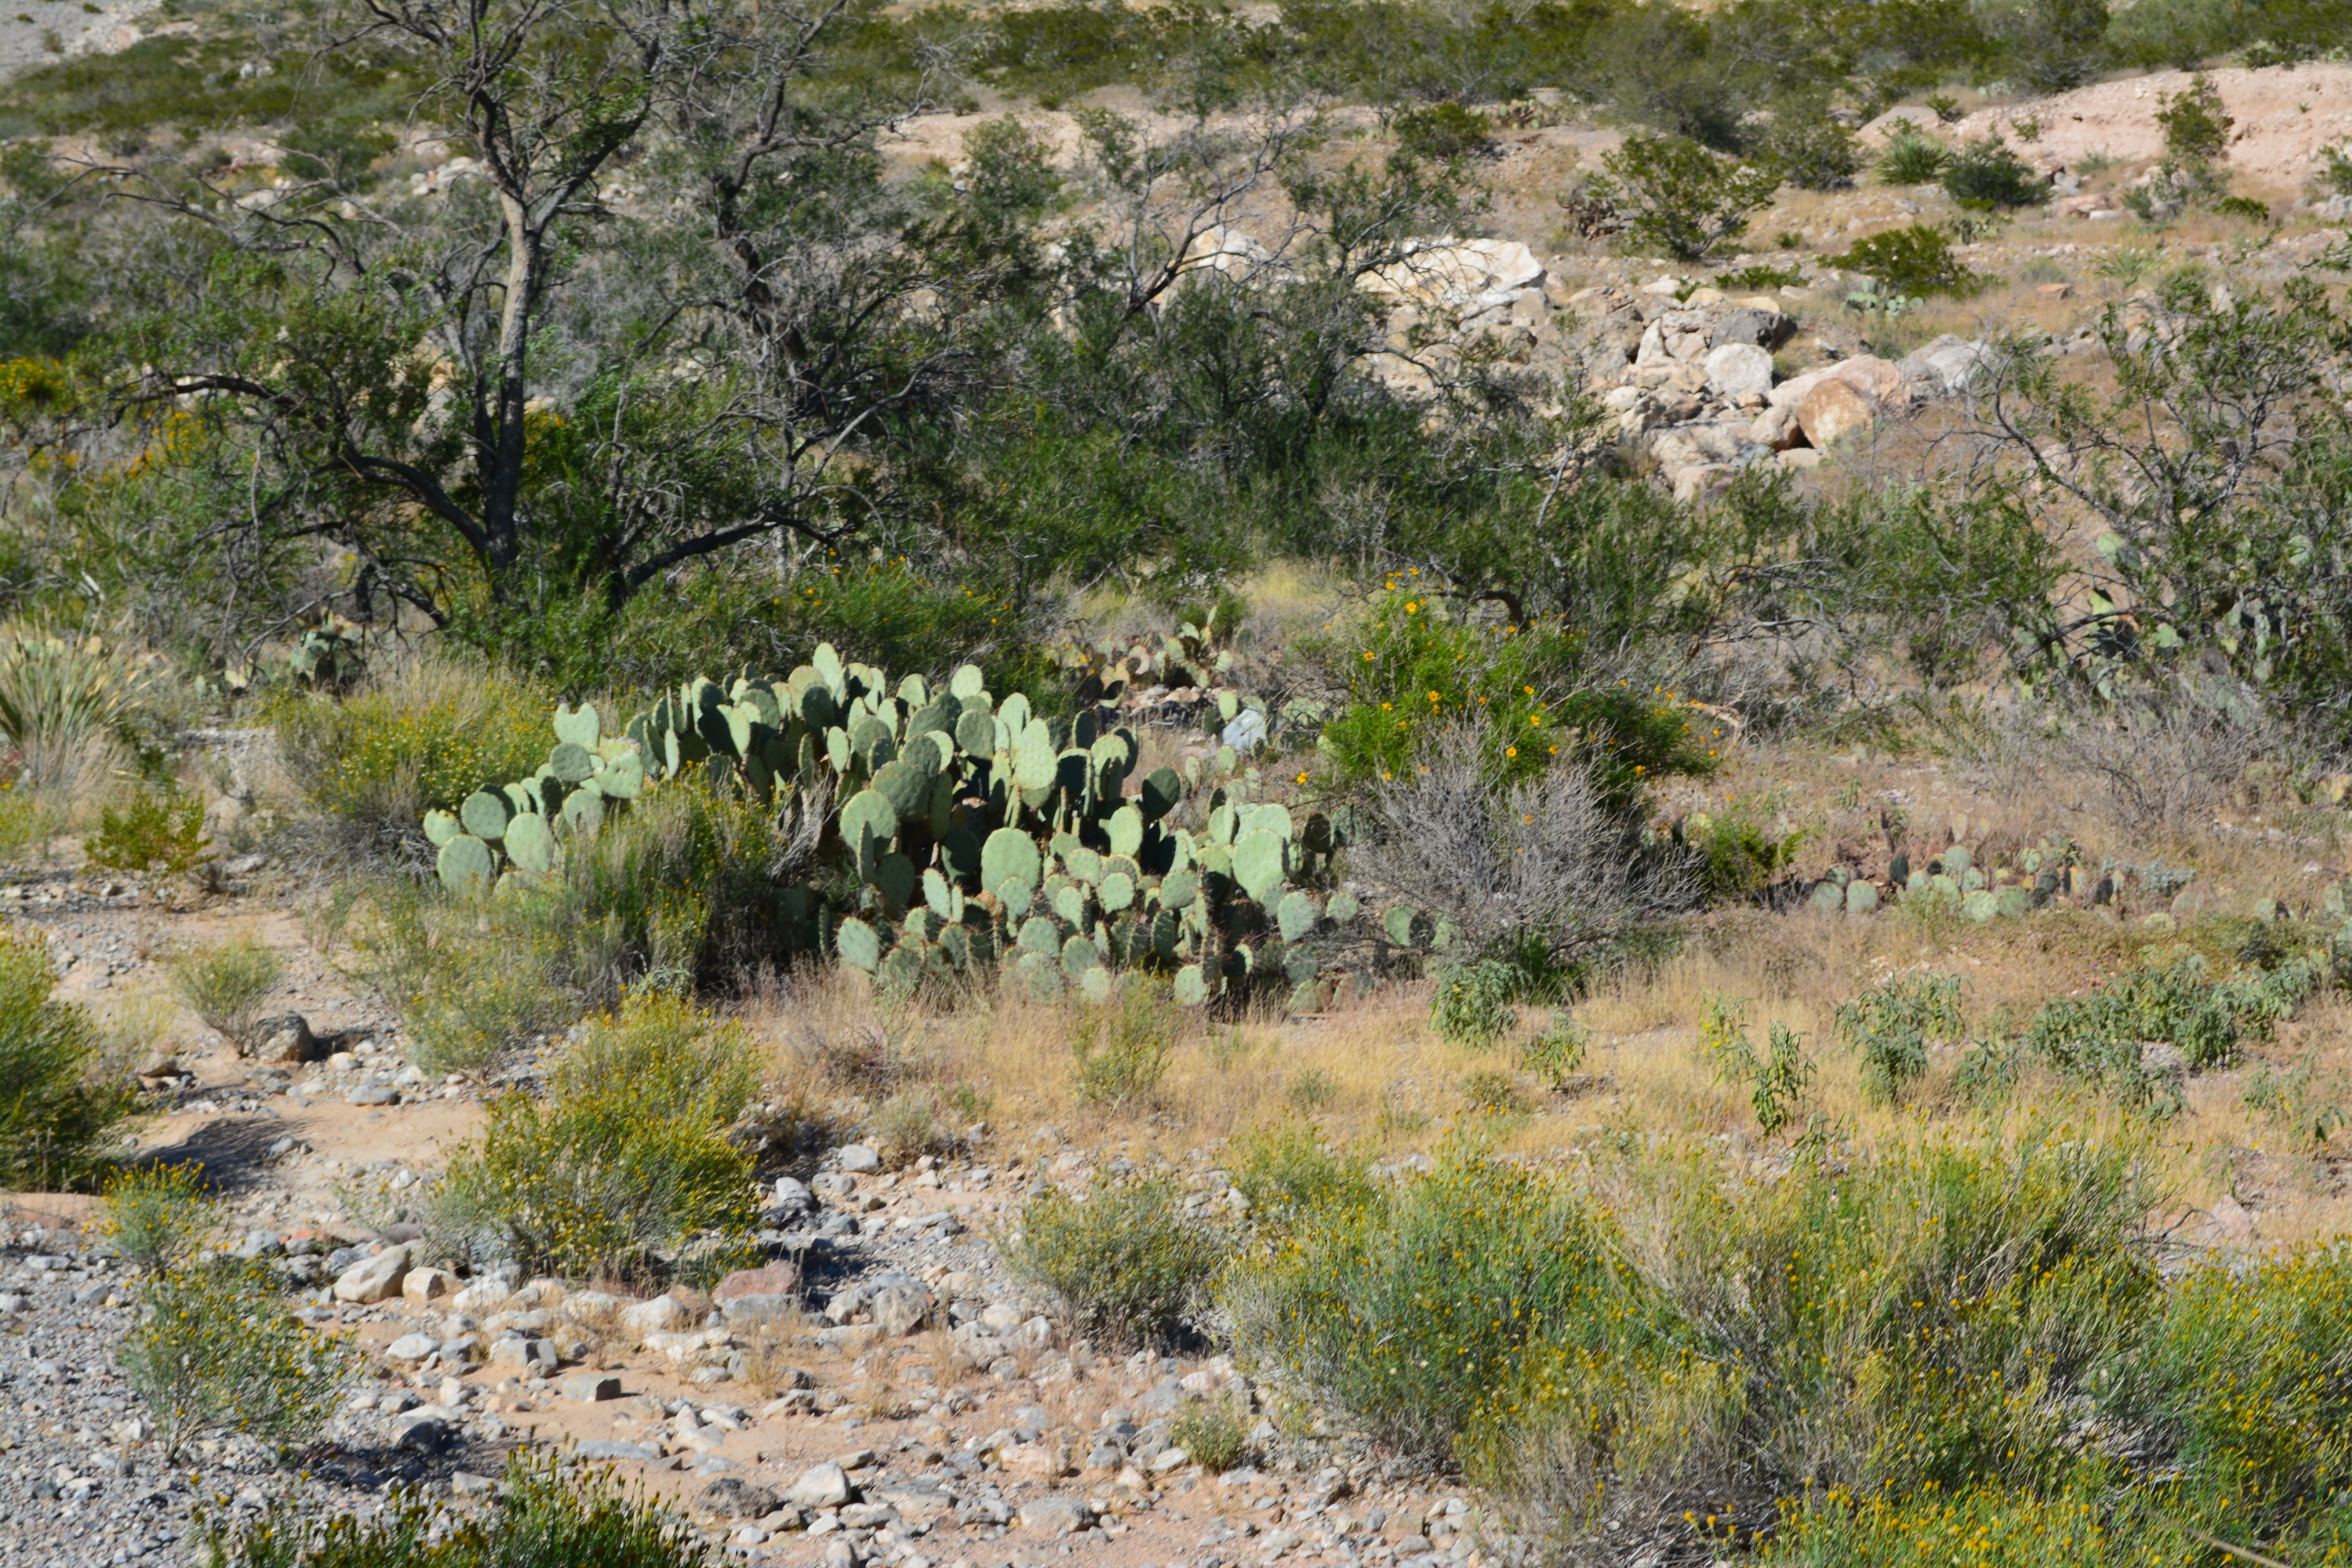 Desert, Cactus, Green, Landscape, animals in the wild, animal wildlife